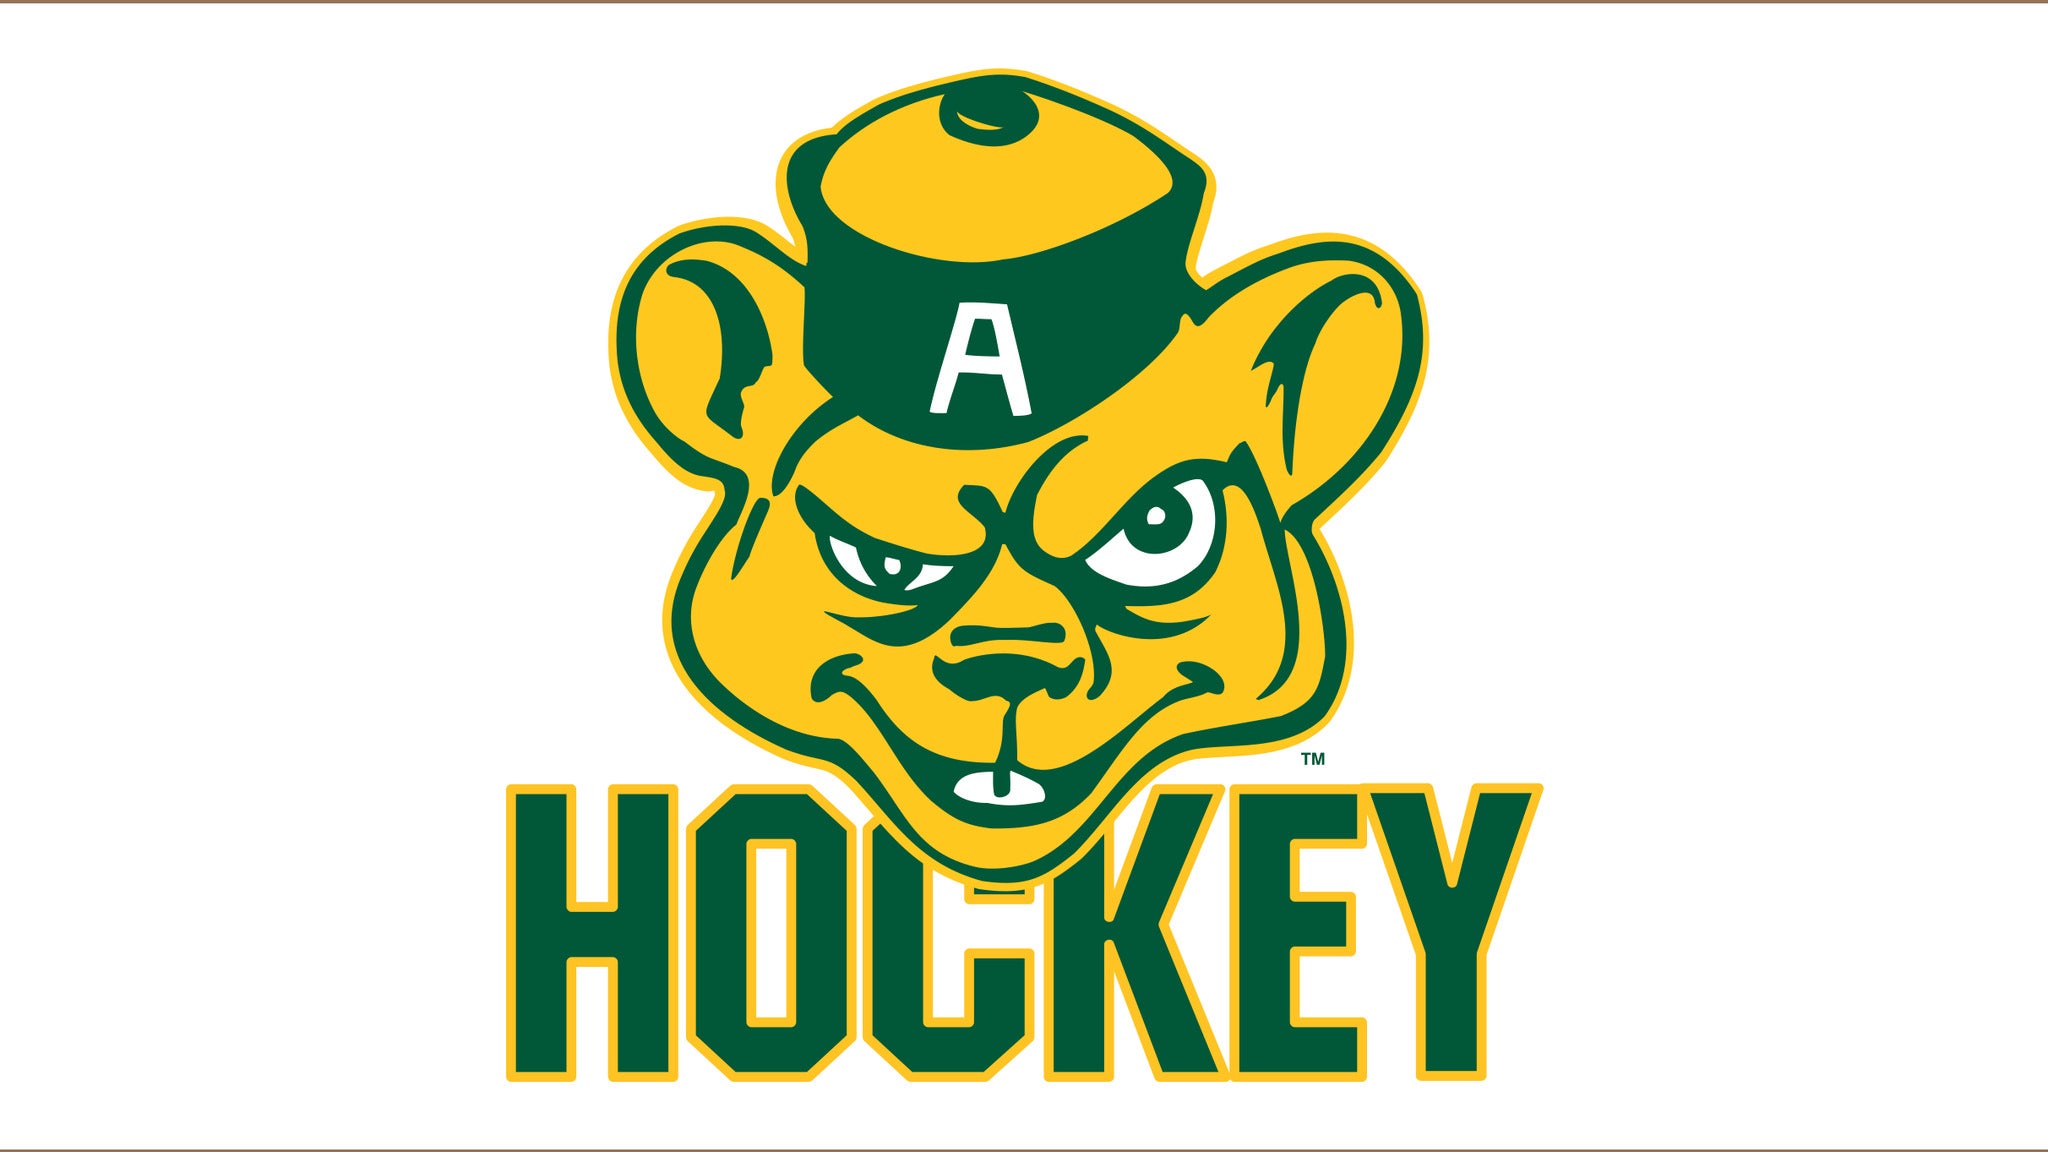 University of Alberta Golden Bears Ice Hockey presale information on freepresalepasswords.com